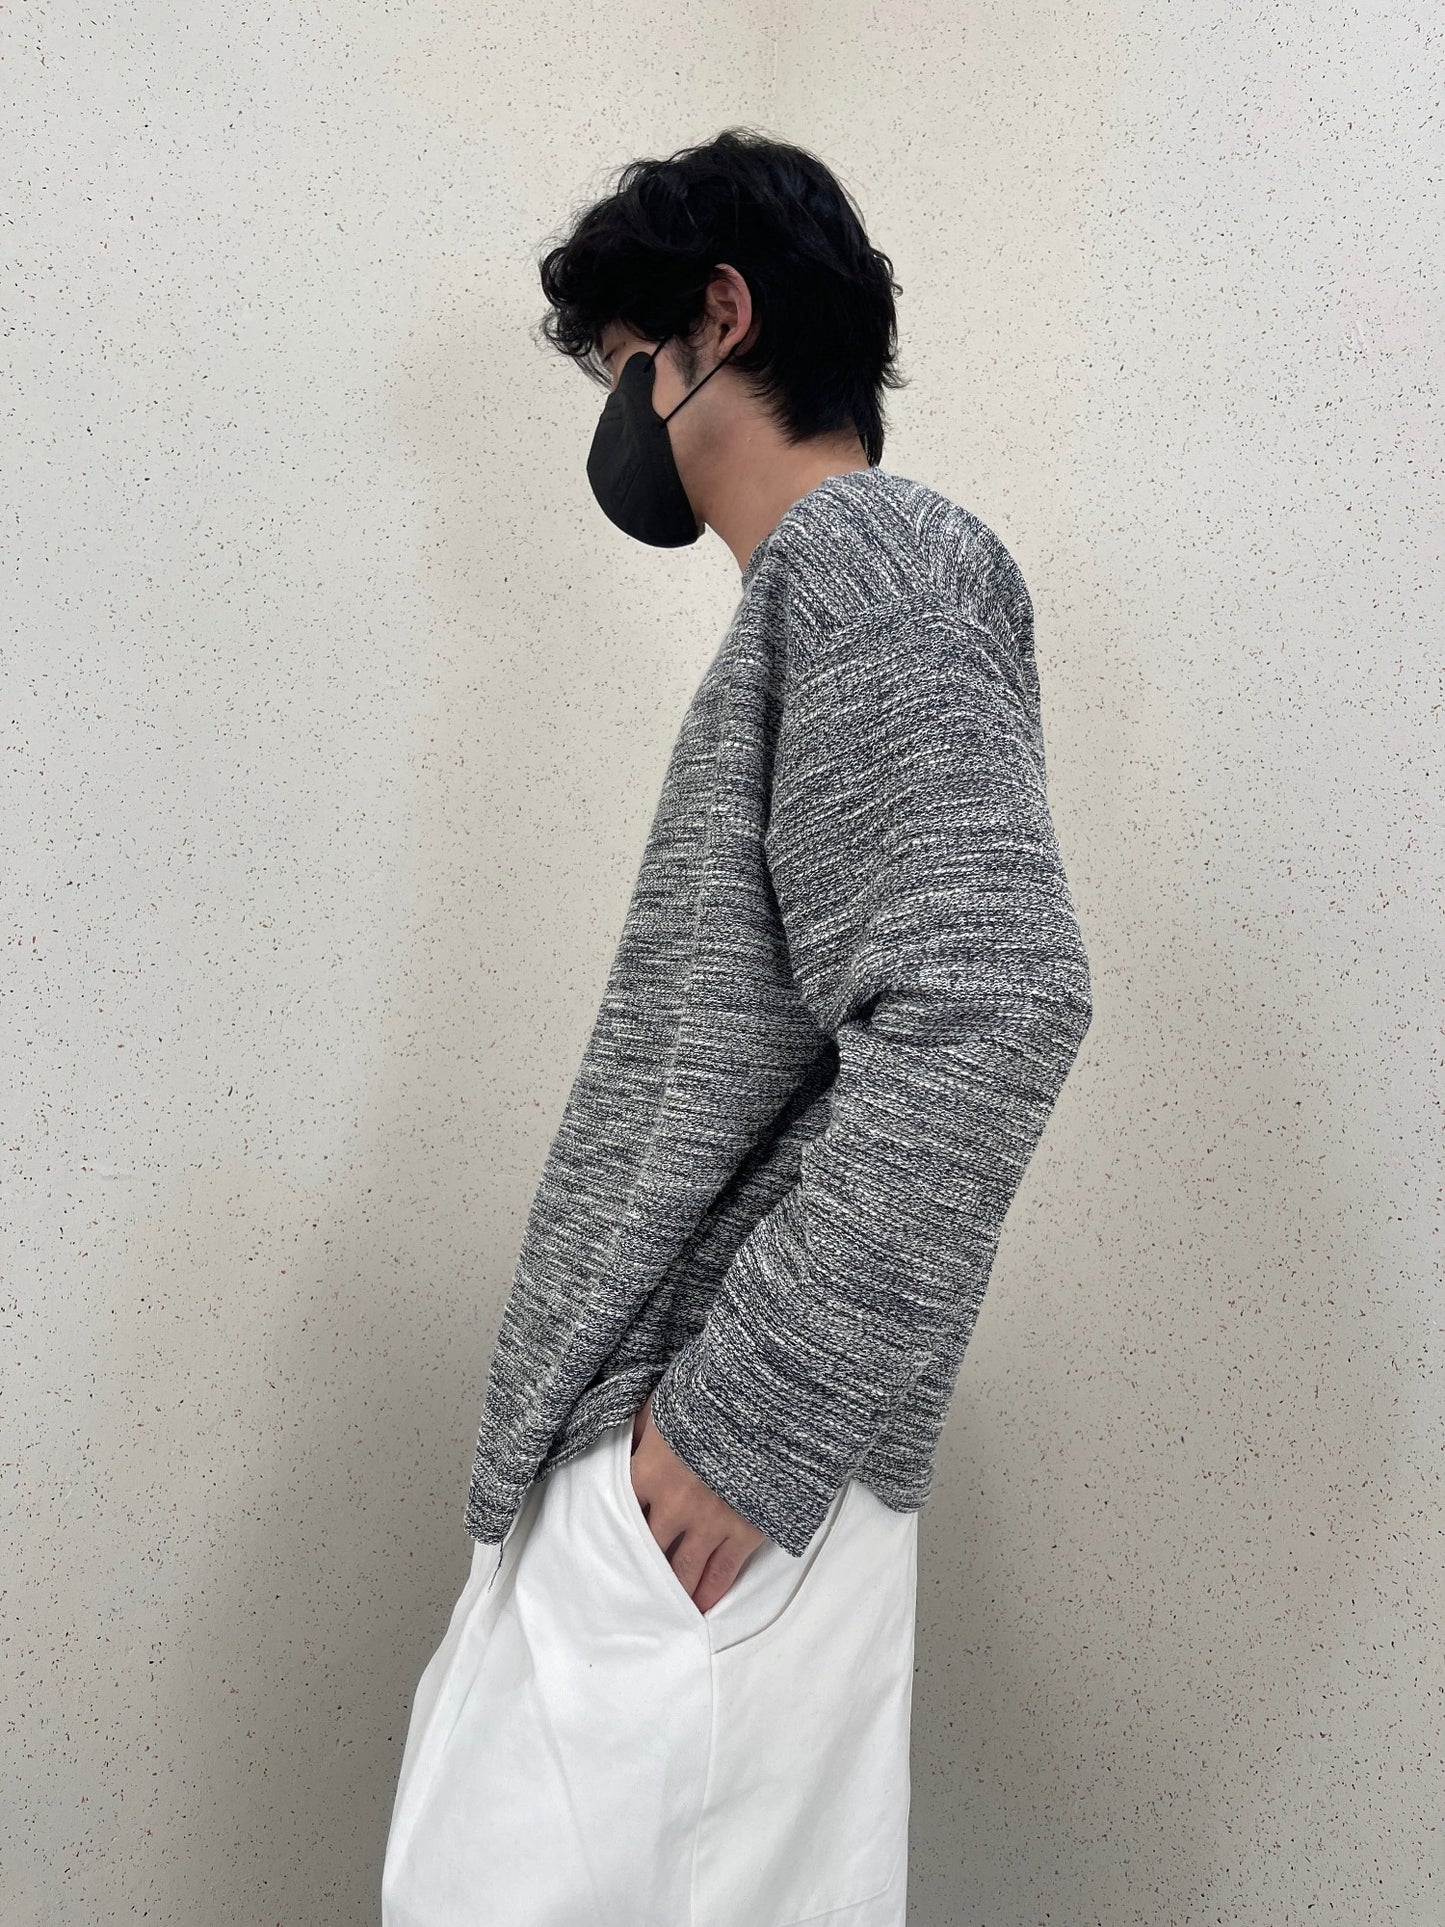 Rough Tweed Knit Grey 트위드 오버핏 긴팔티 루즈핏 남자 봄 니트 그레이